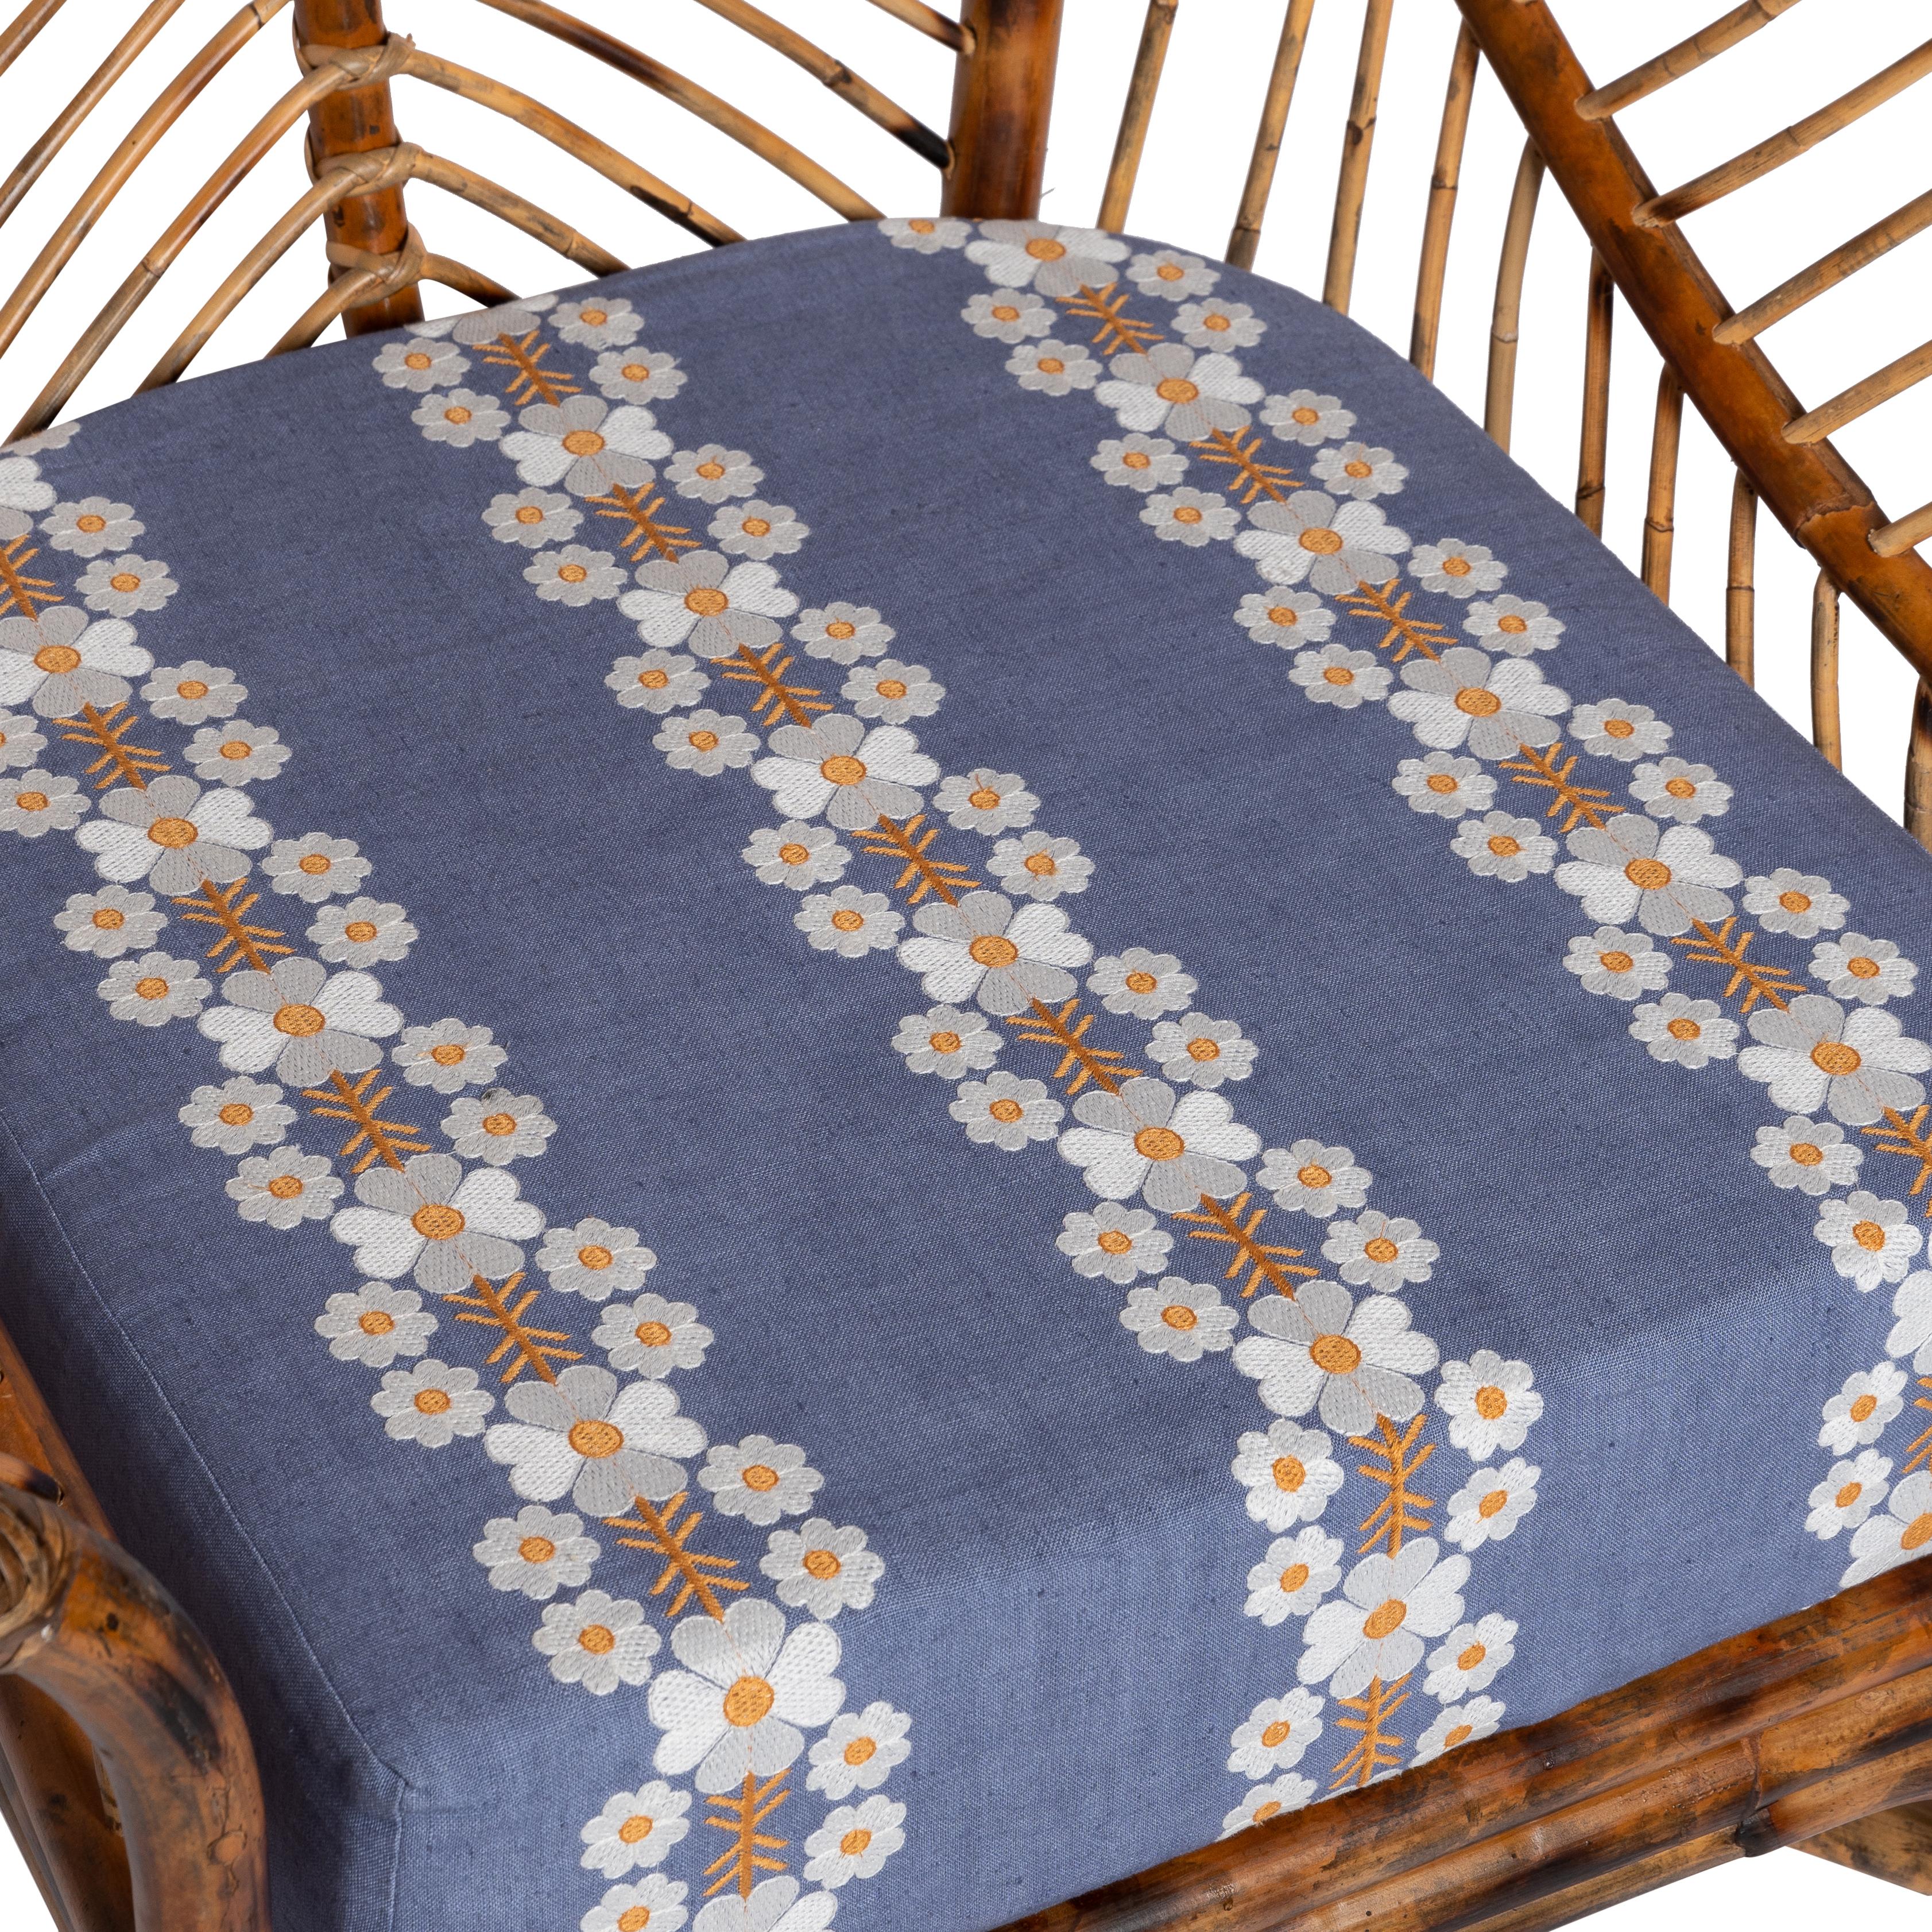 Indonesian Bamboo Chair Natural Rattan, Blue Cushion, Modern, by Sharland England